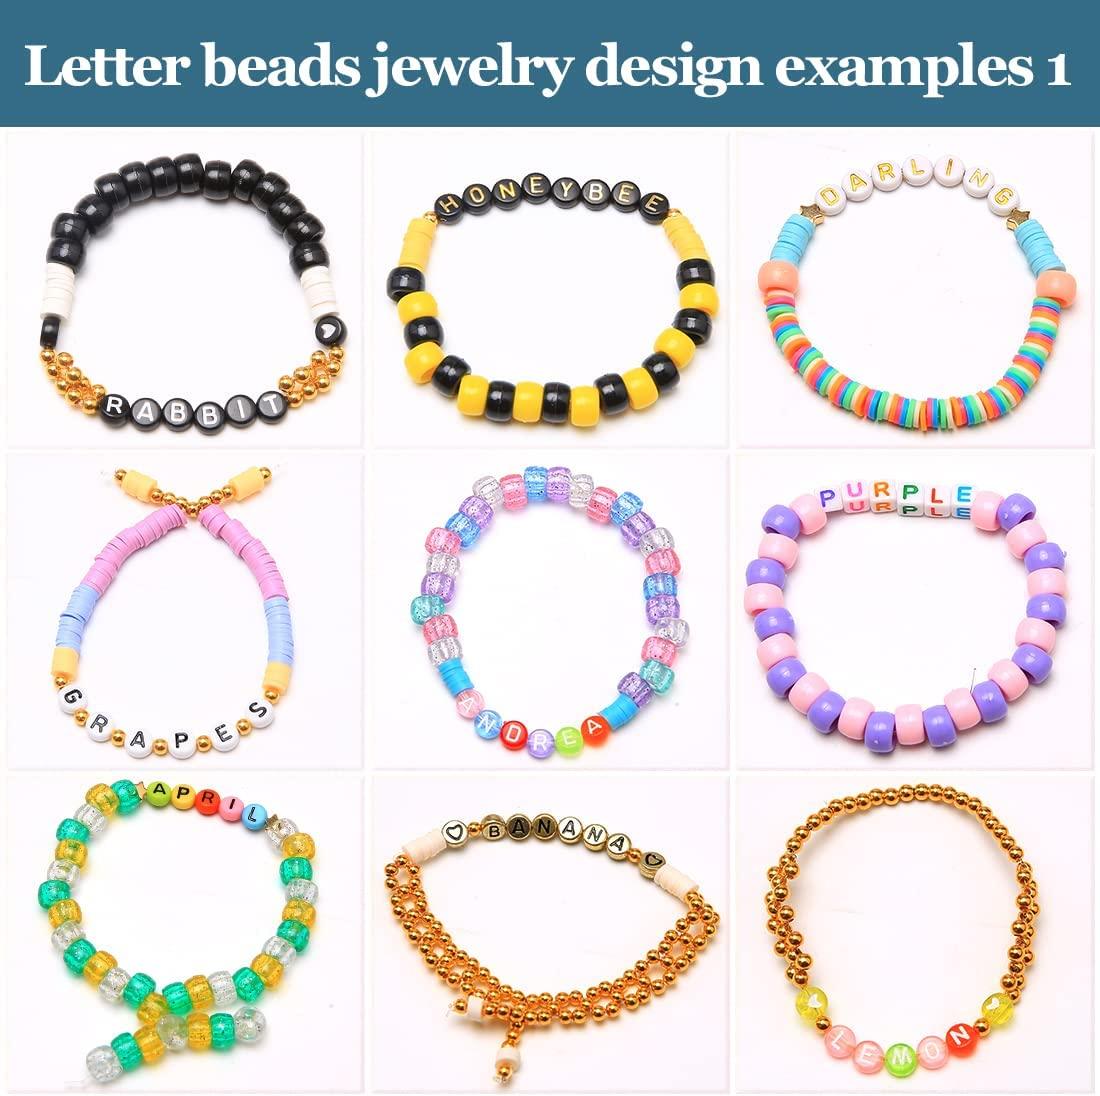 Bundooraking1400pcs Letter Beads, Black&White Alphabet Beads, 4x7mm Acrylic Beads, 28 Grids Letter Beads for Jewelry Making Kandi Beads Letter Beads